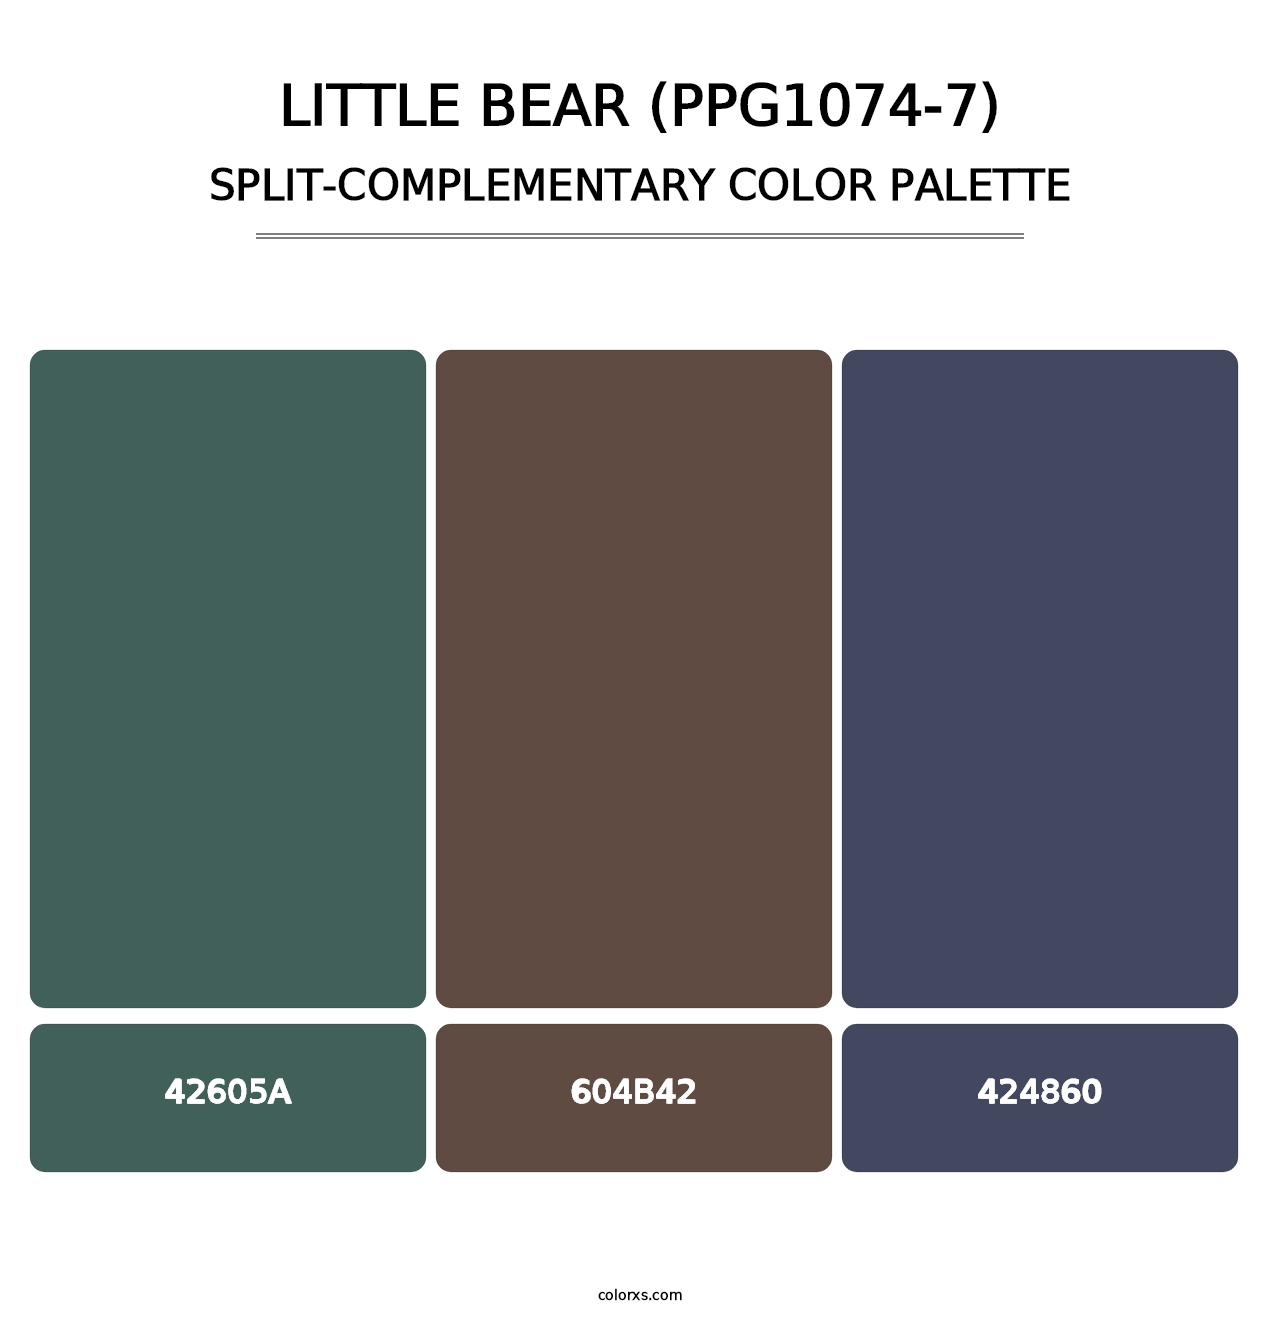 Little Bear (PPG1074-7) - Split-Complementary Color Palette